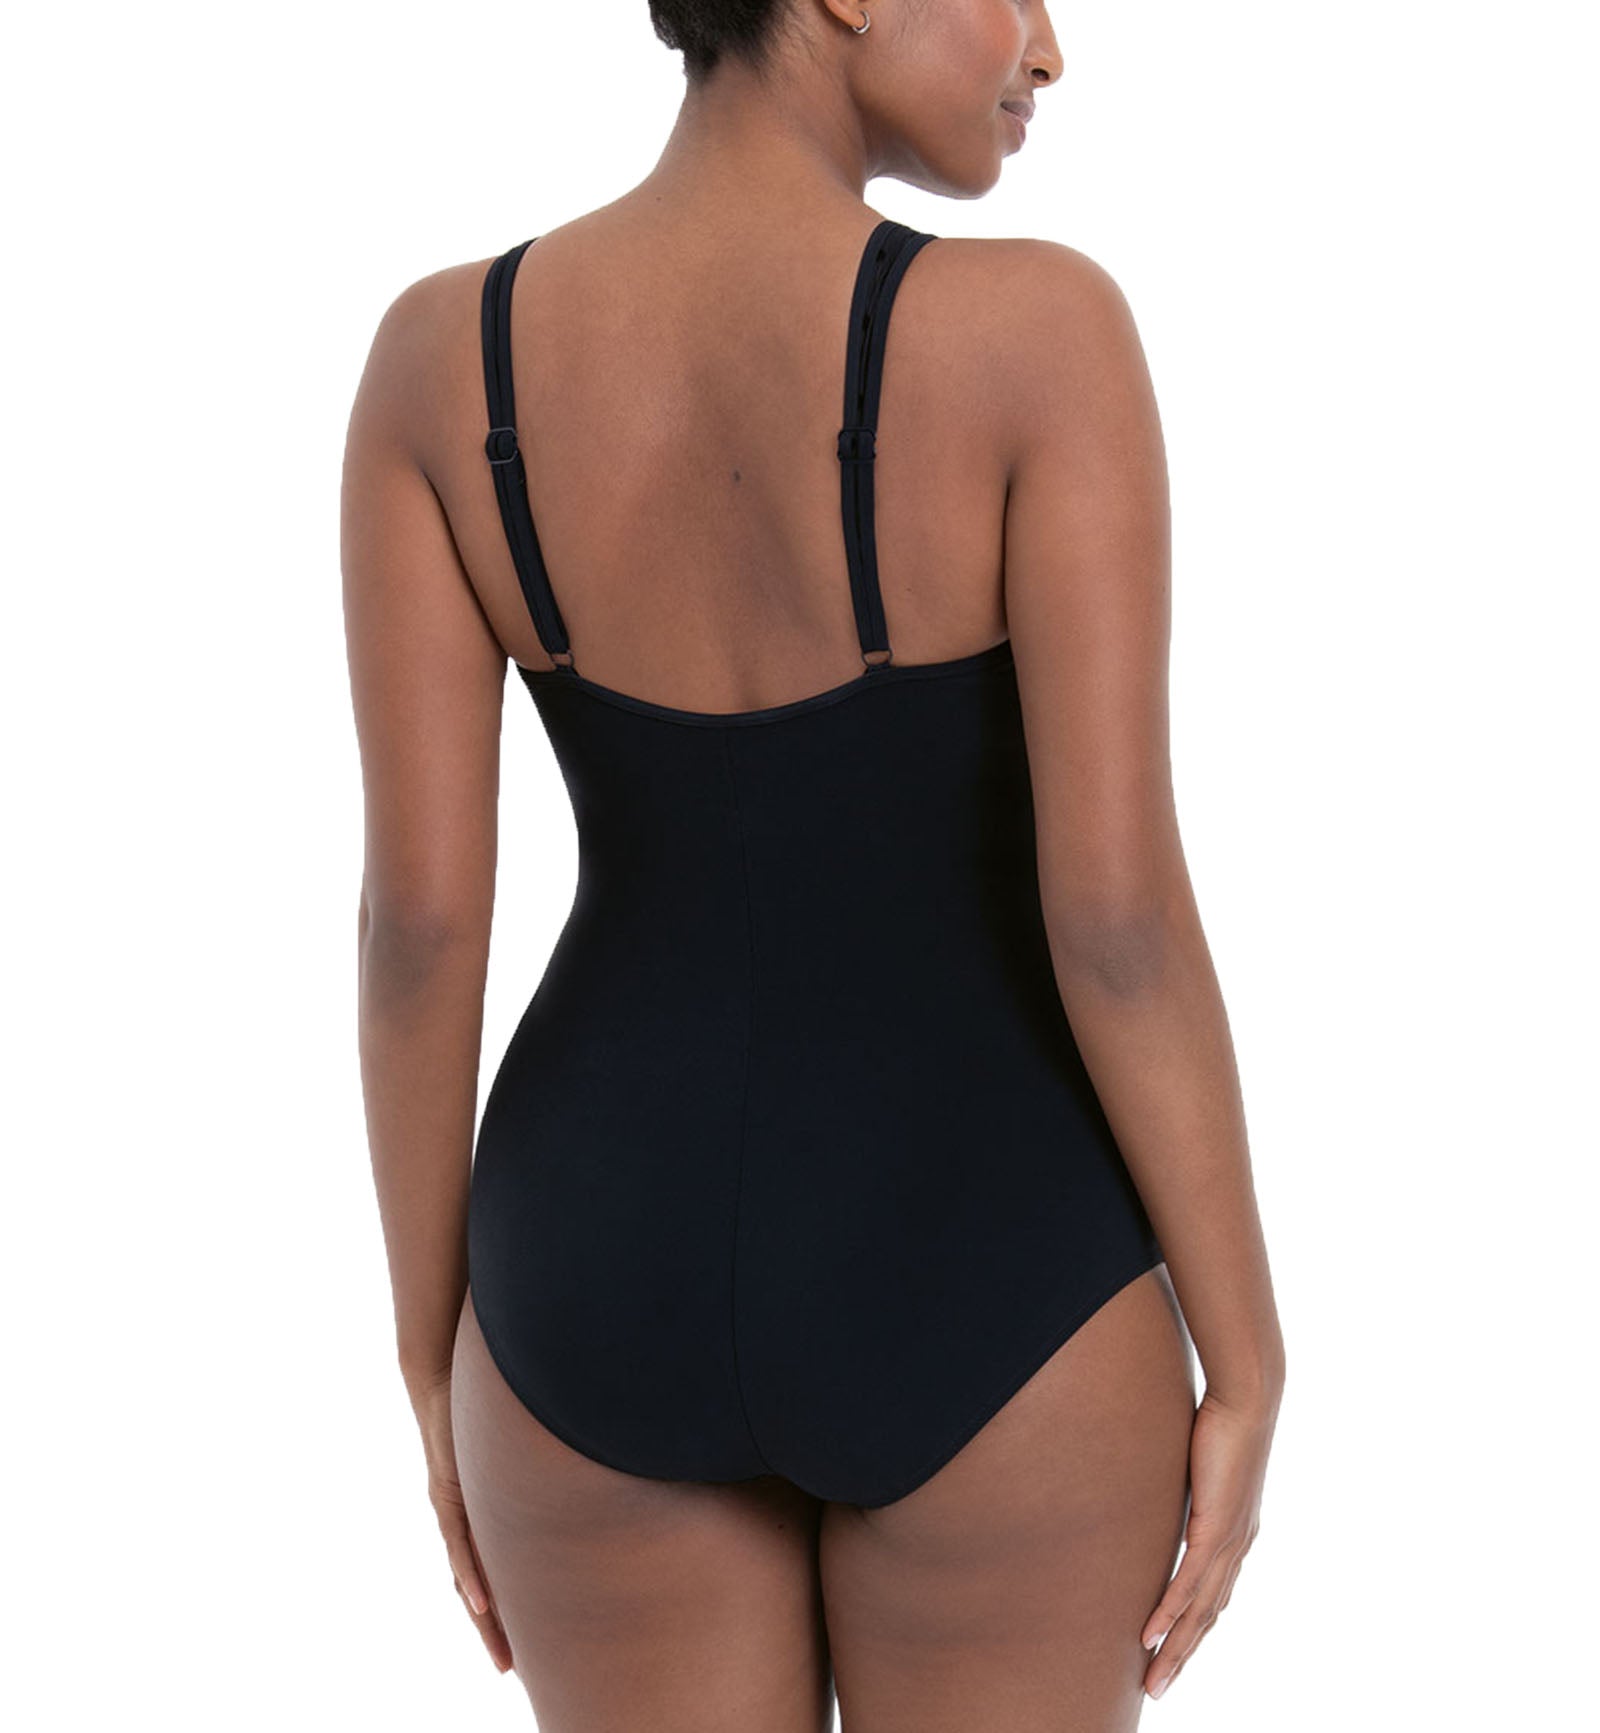 Anita Care Summer Dot Vera High Neck One Piece Swimsuit (6224),32C,Black - Black,32C